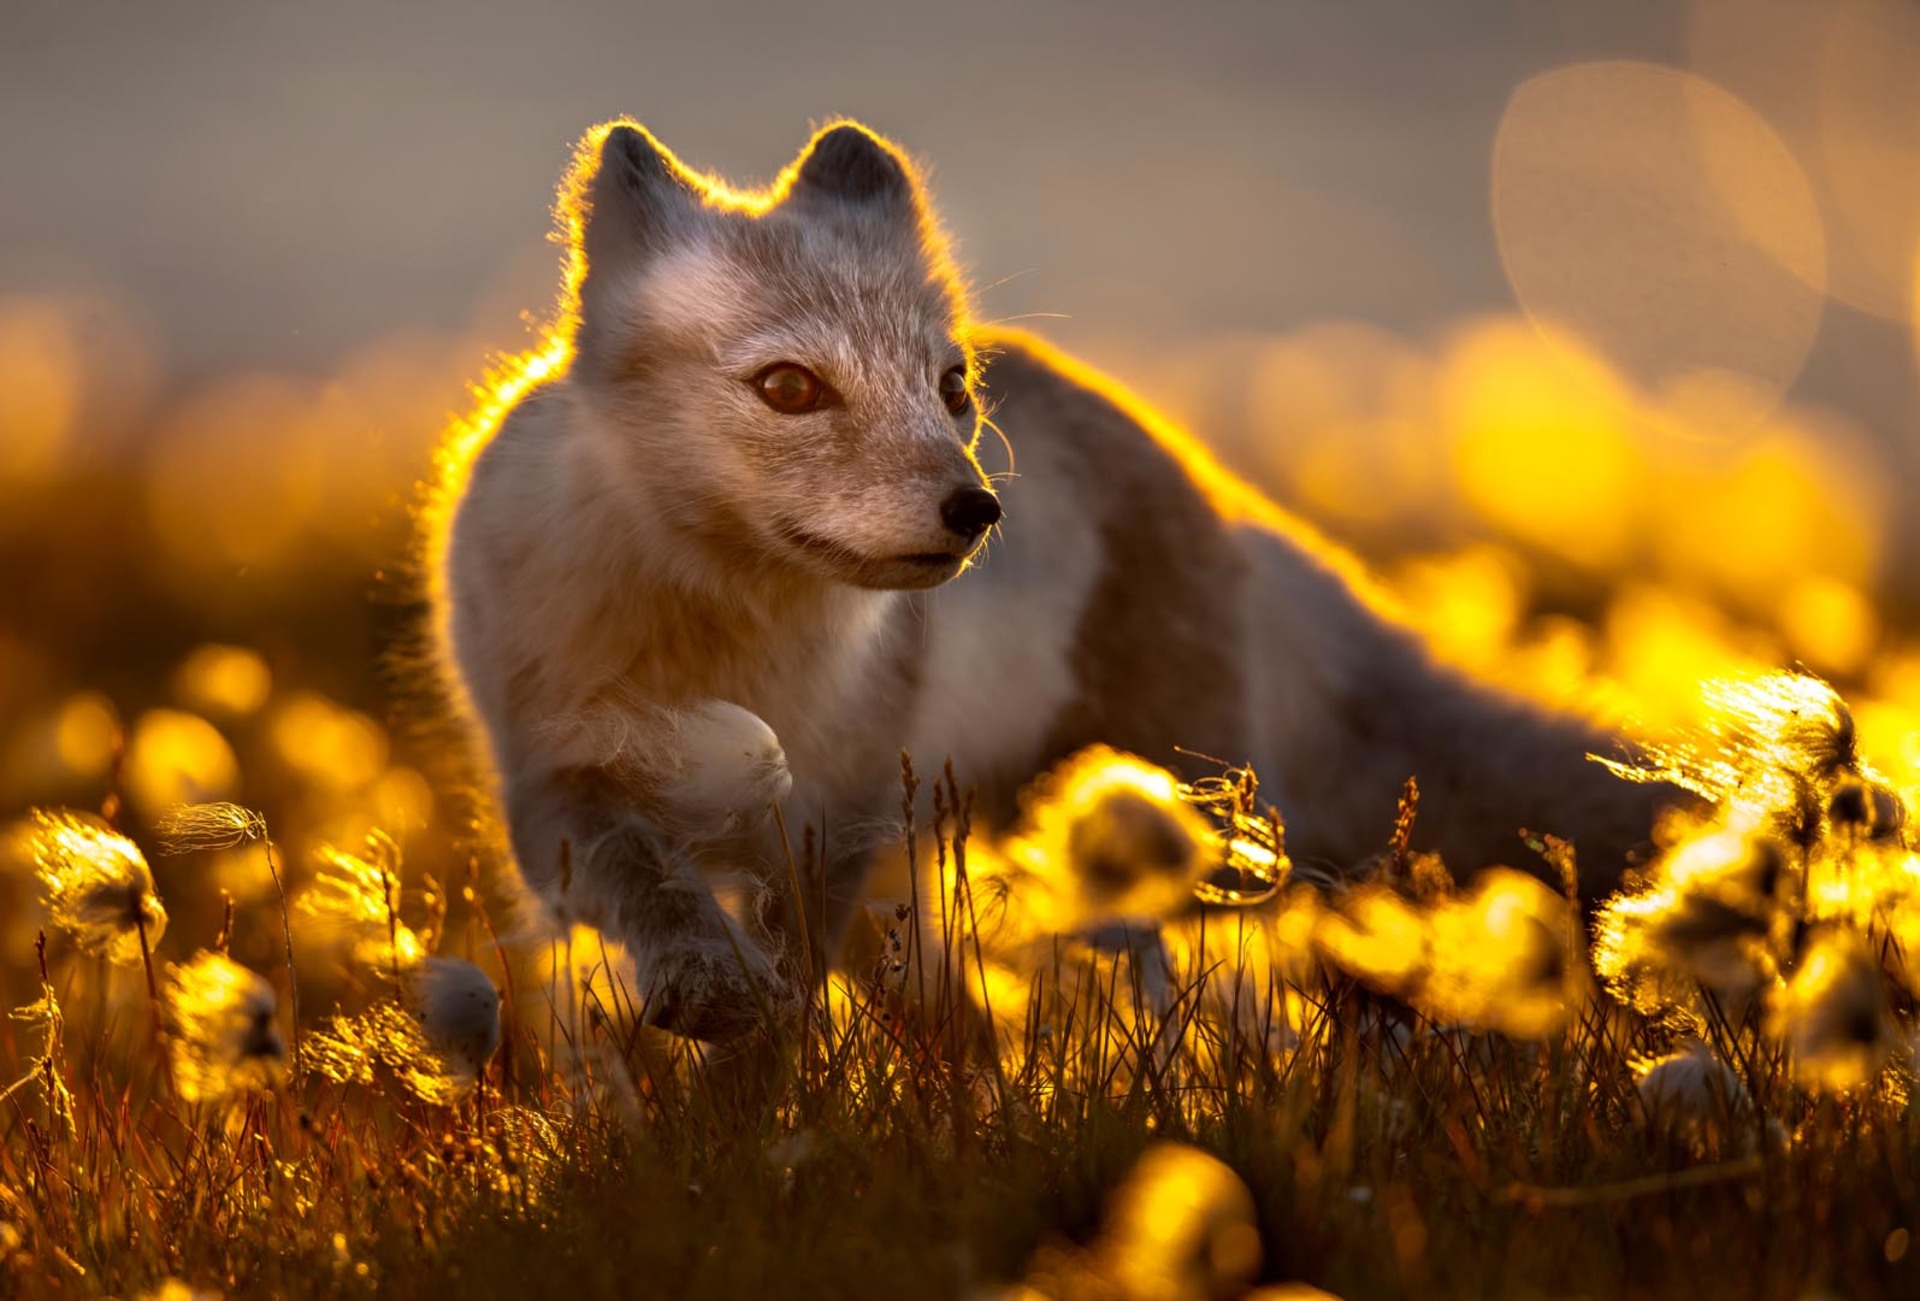 The hunting arctic fox